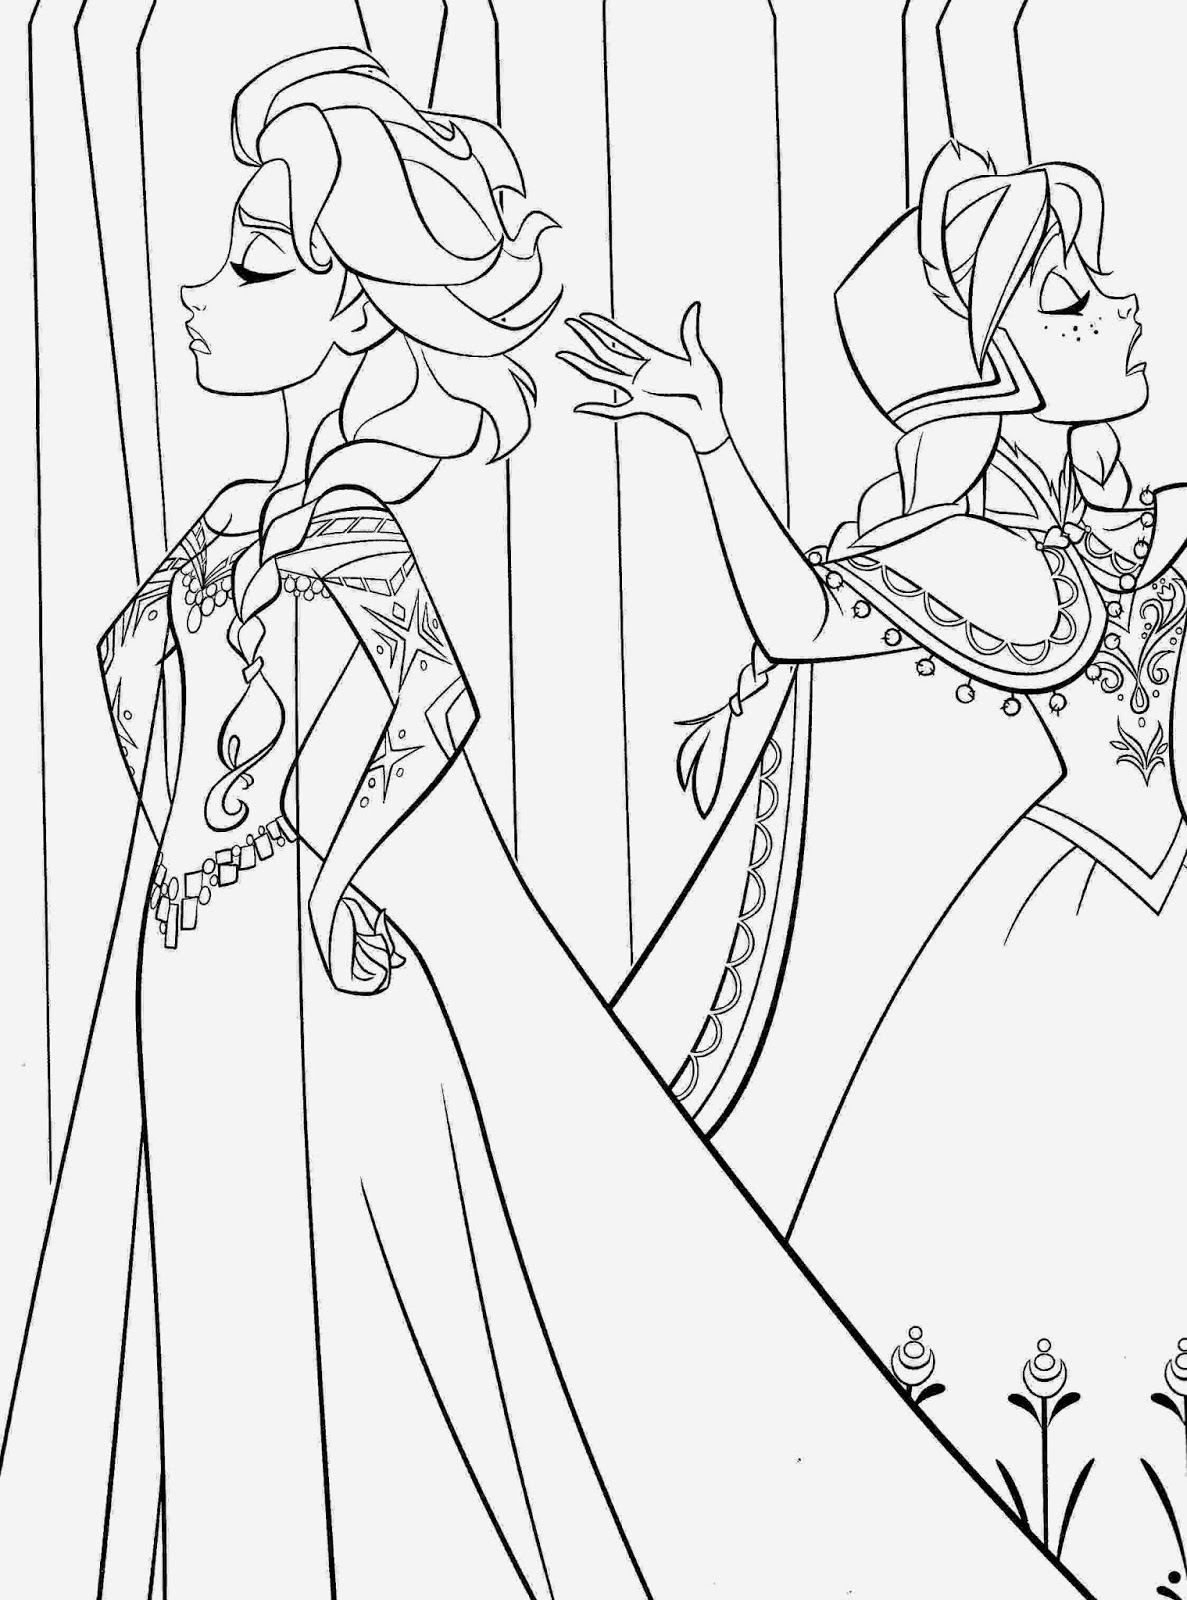 Download Disney Movie Princesses: "Frozen" Printable Coloring Pages